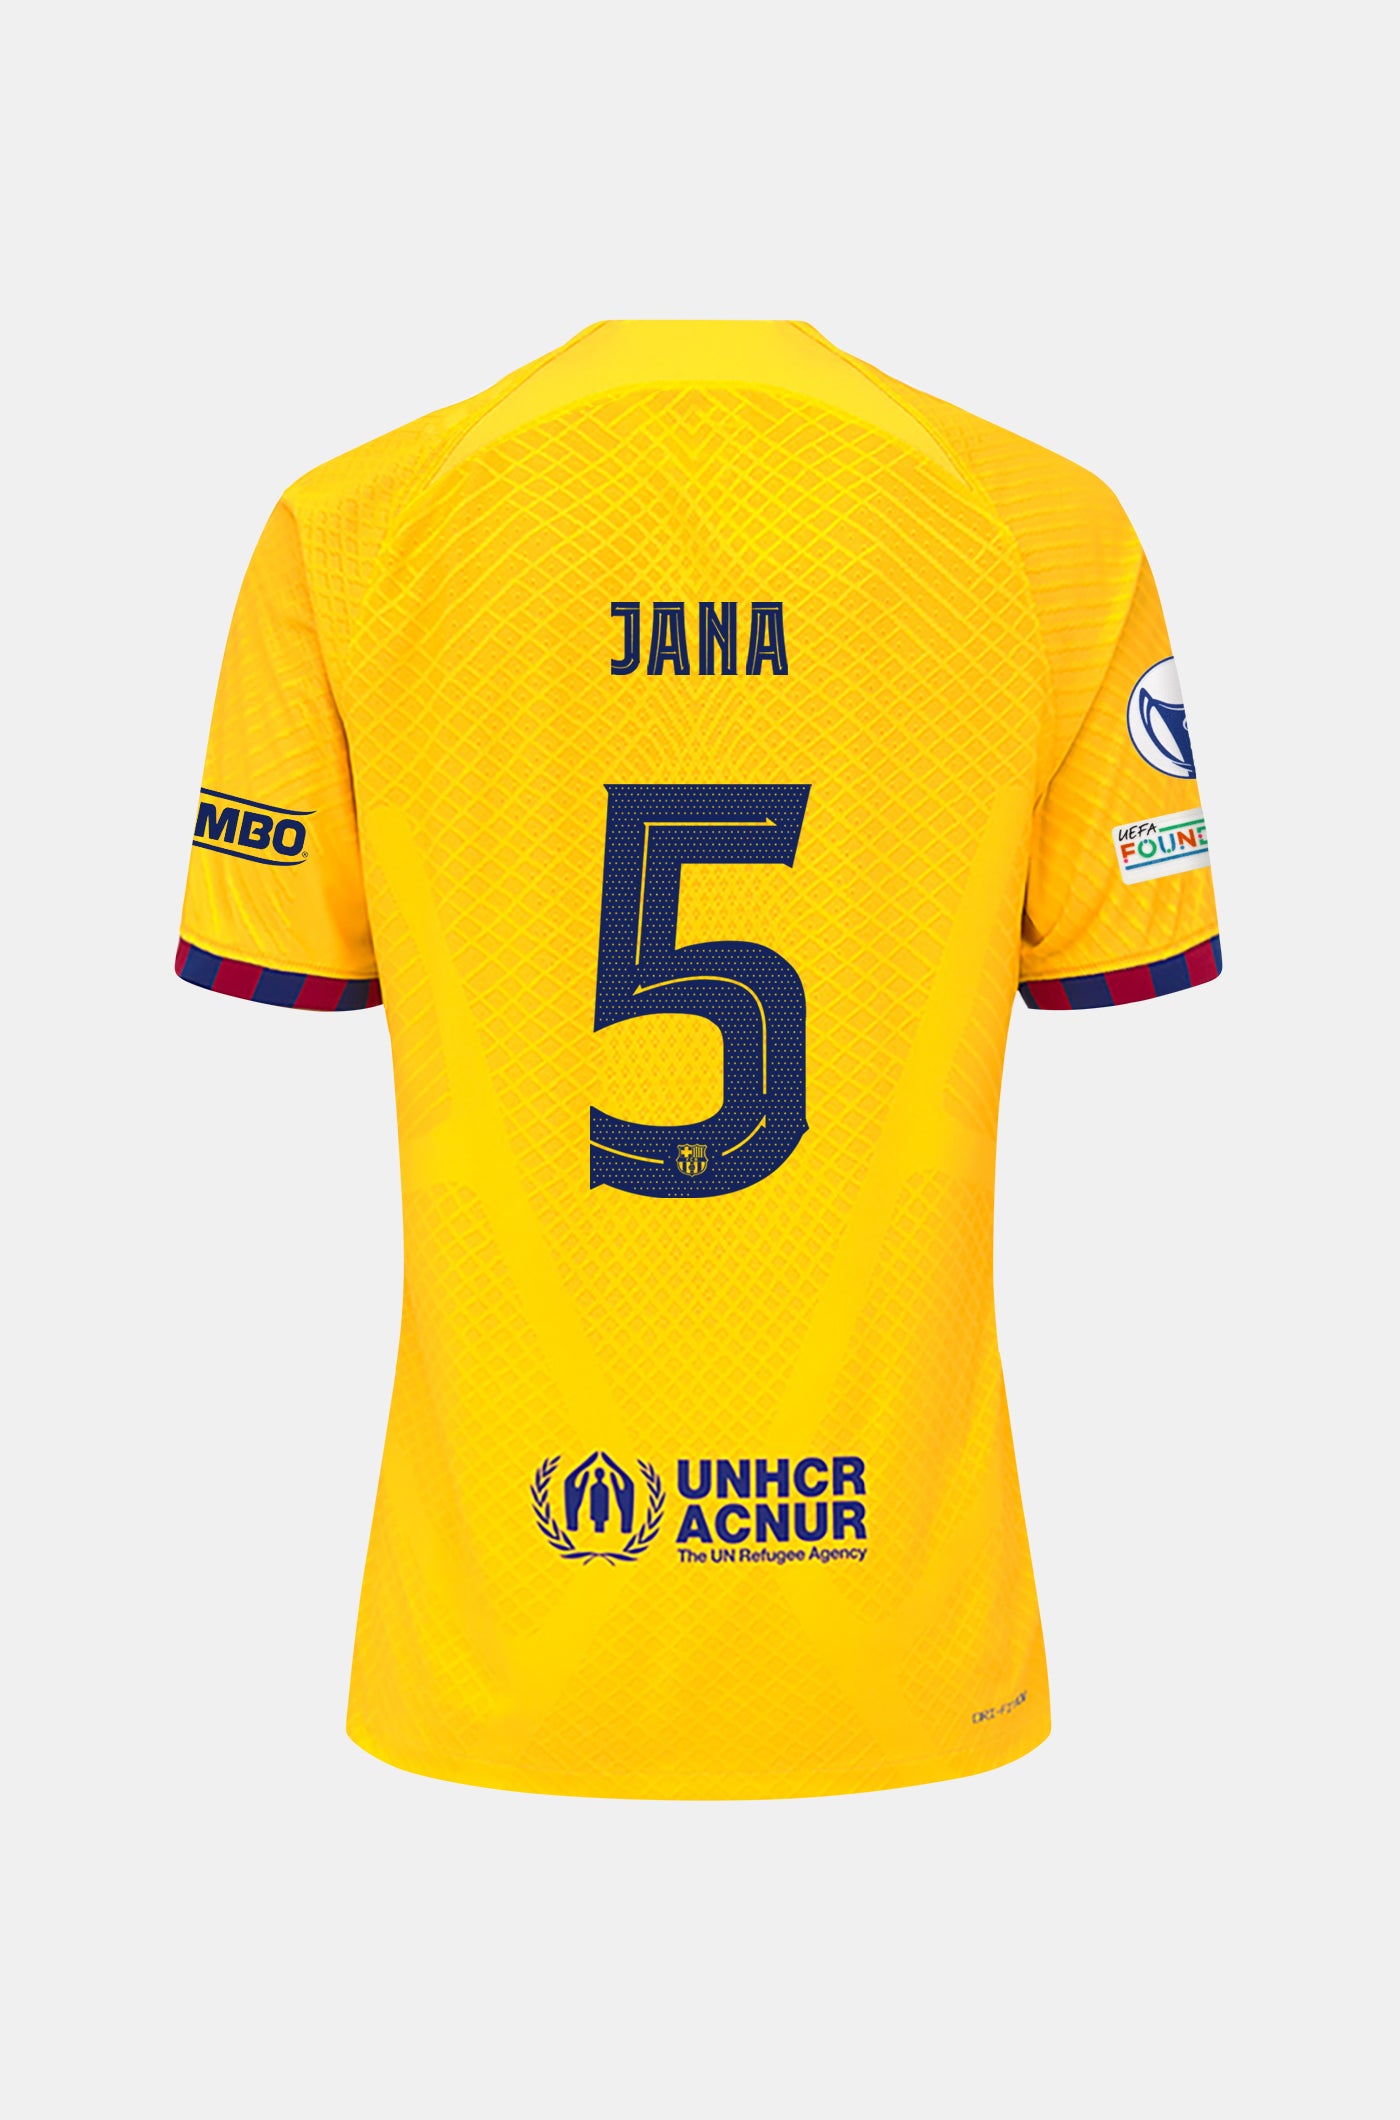 UWCL FC Barcelona fourth shirt 23/24 Player's Edition - JANA